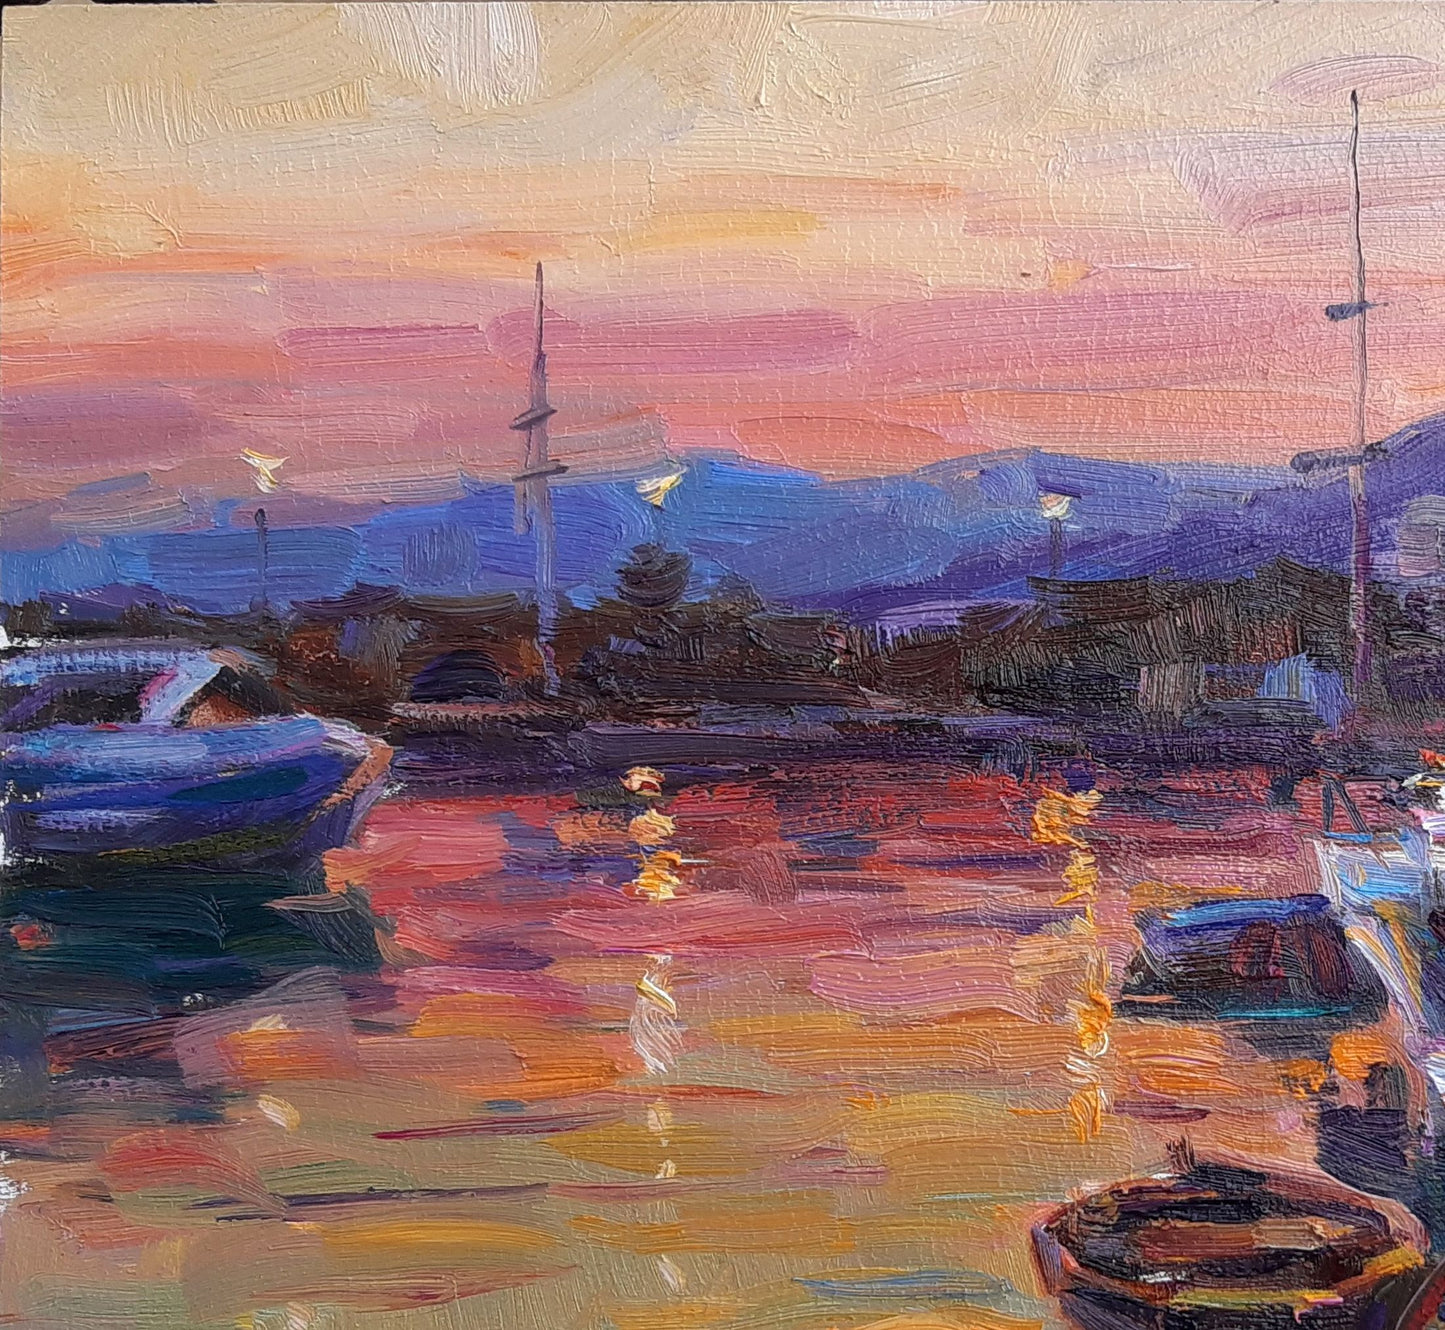 Oli painting Evening in the port Pereta Vyacheslav